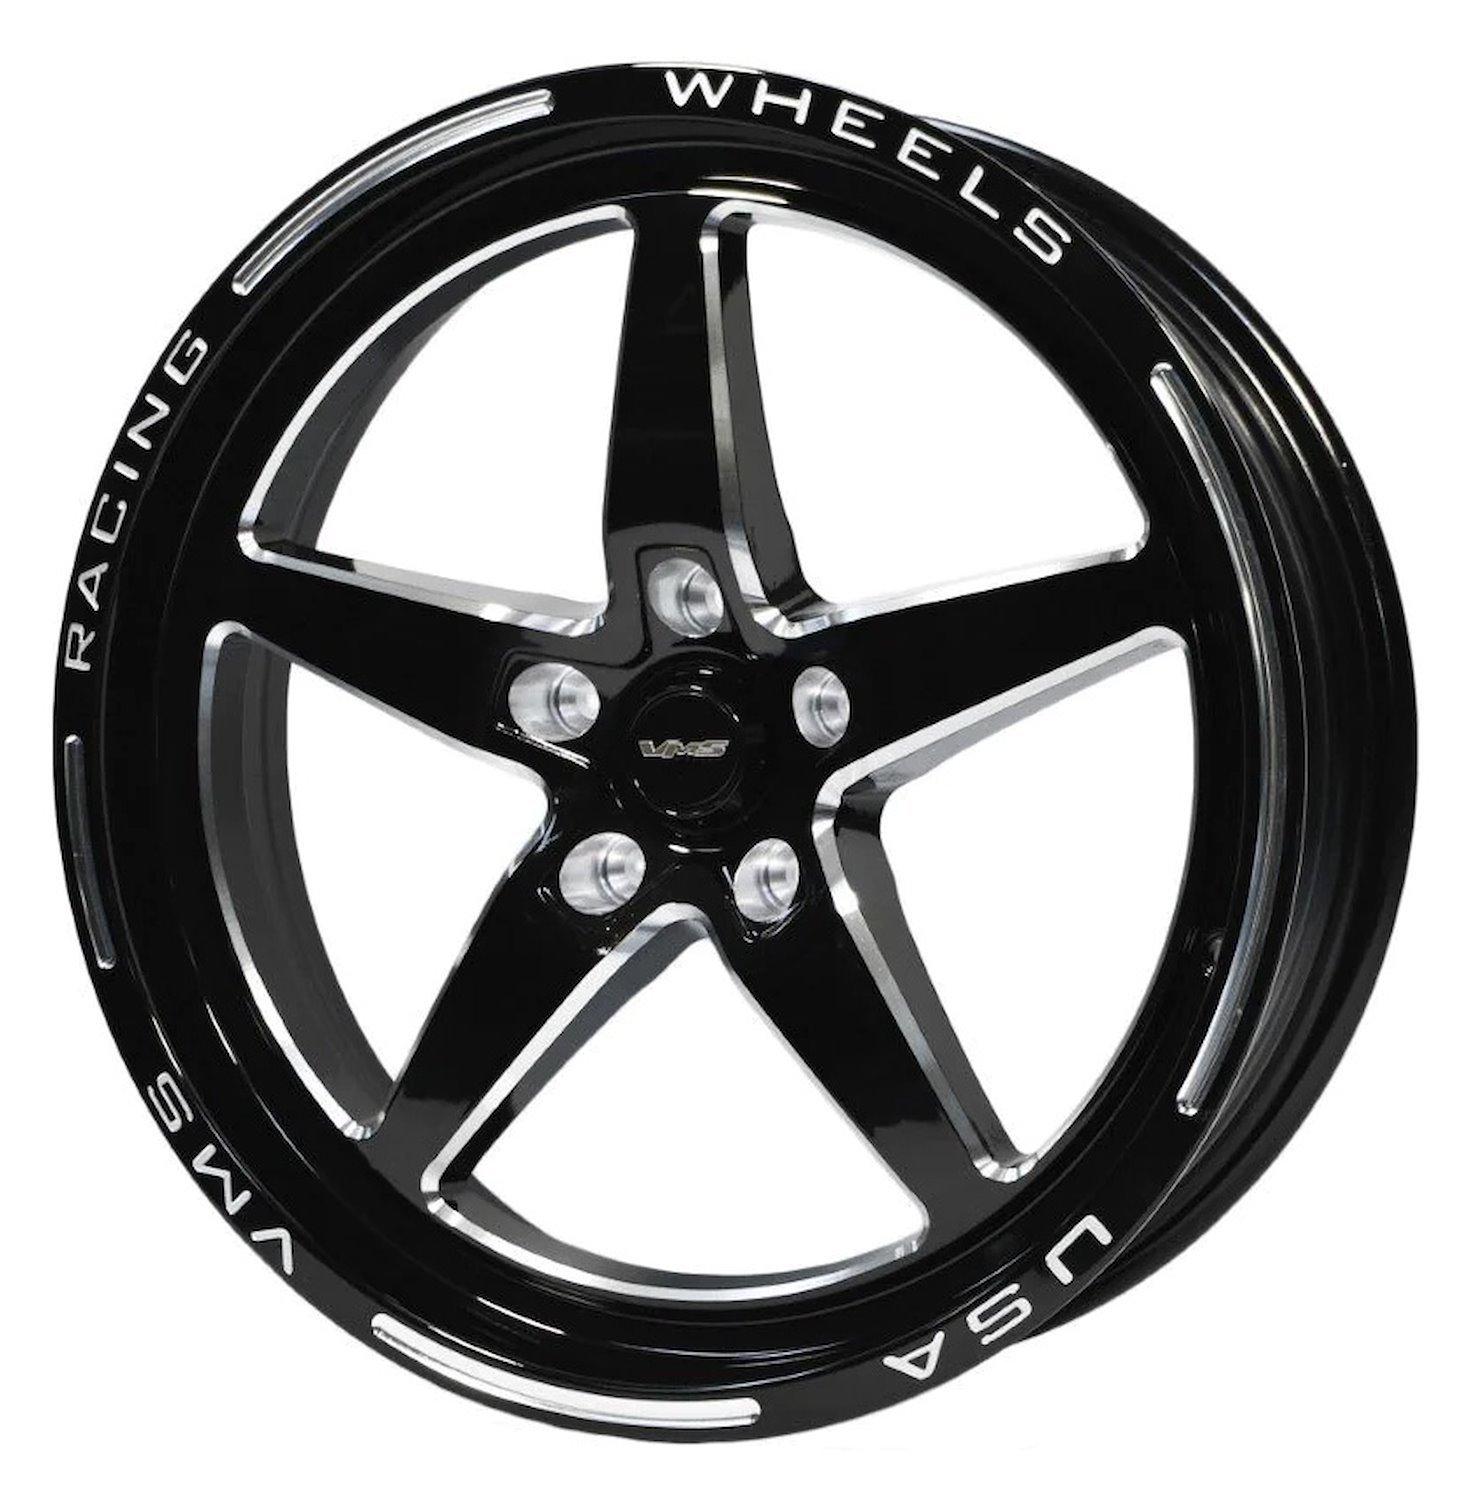 VWST032 V-Star Wheel, Size: 18" x 5", Bolt Pattern: 5 x 115 mm [Finish: Gloss Black Milled]